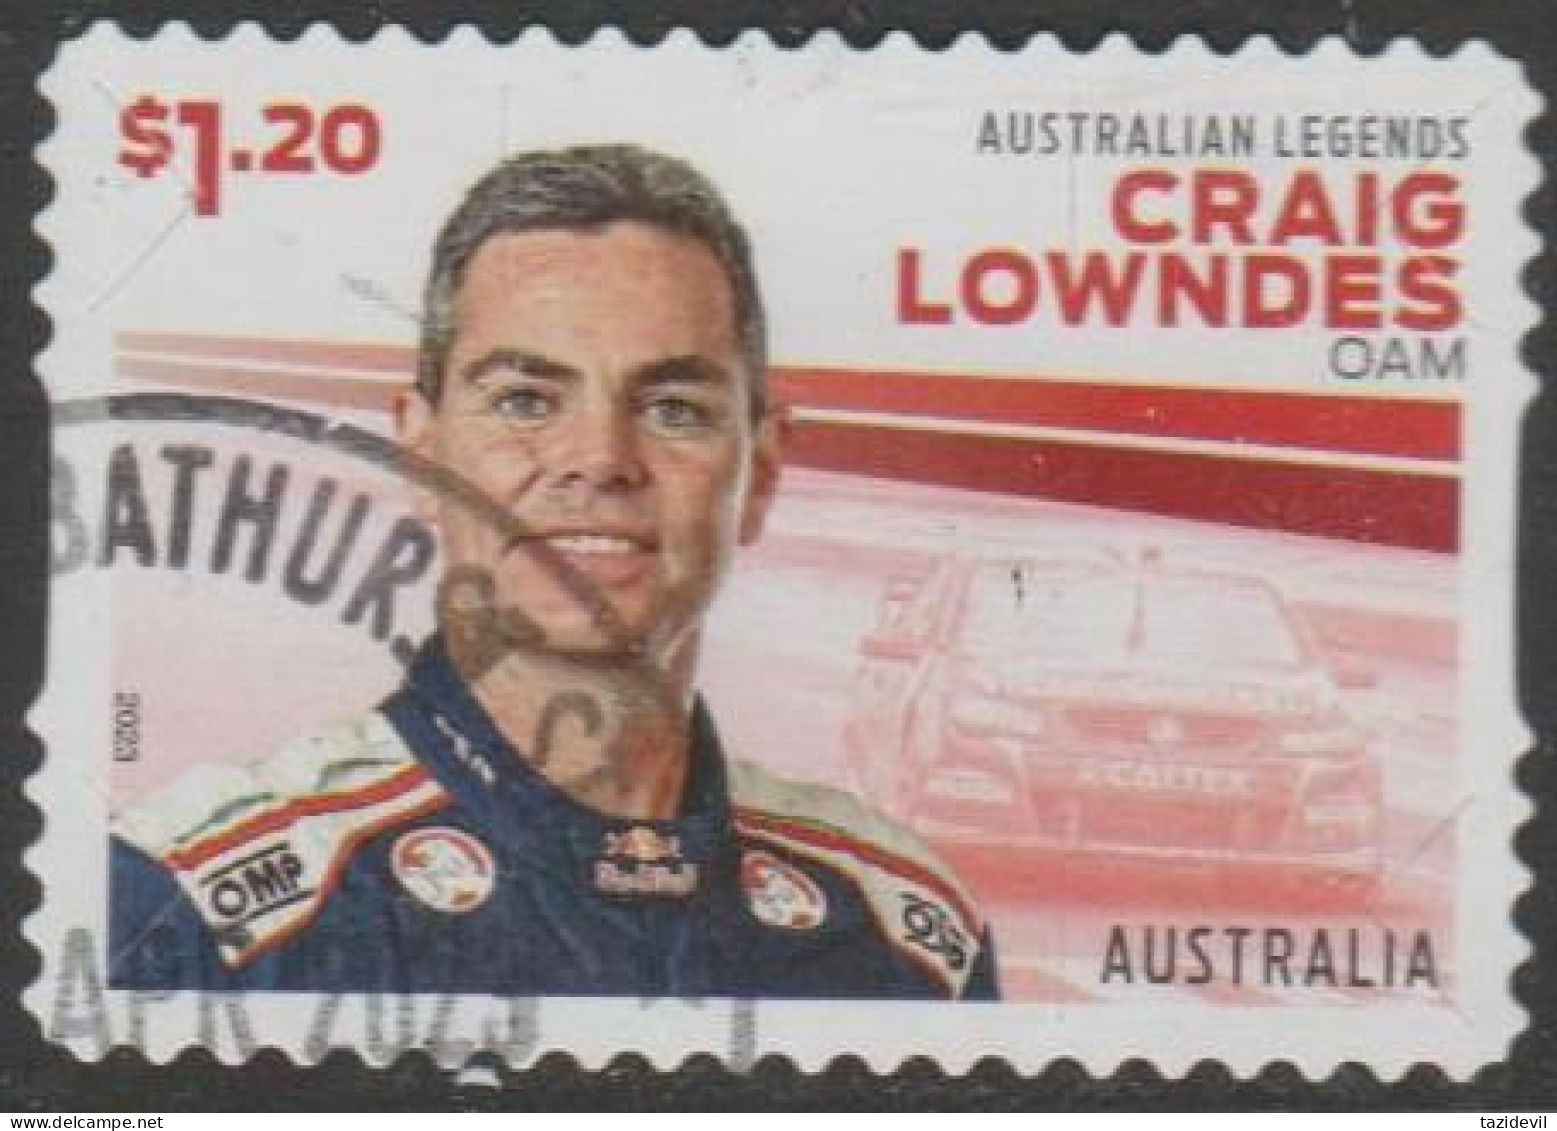 AUSTRALIA - DIE-CUT-USED 2023 $1.20 Legends Of Motor Sport - Craig Lowdens OAM - Usati